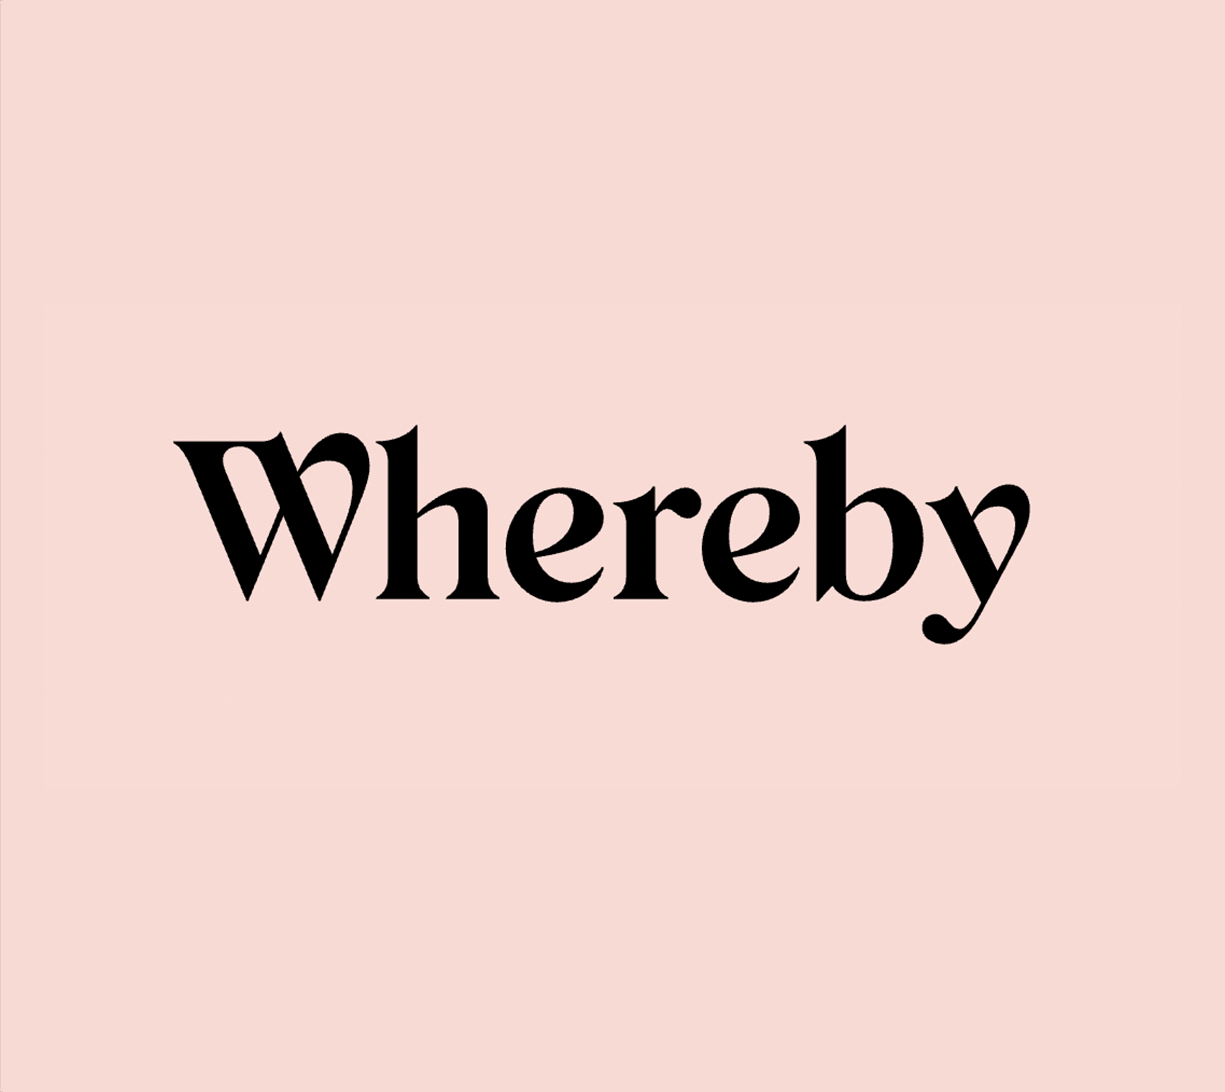 Whereby-logo